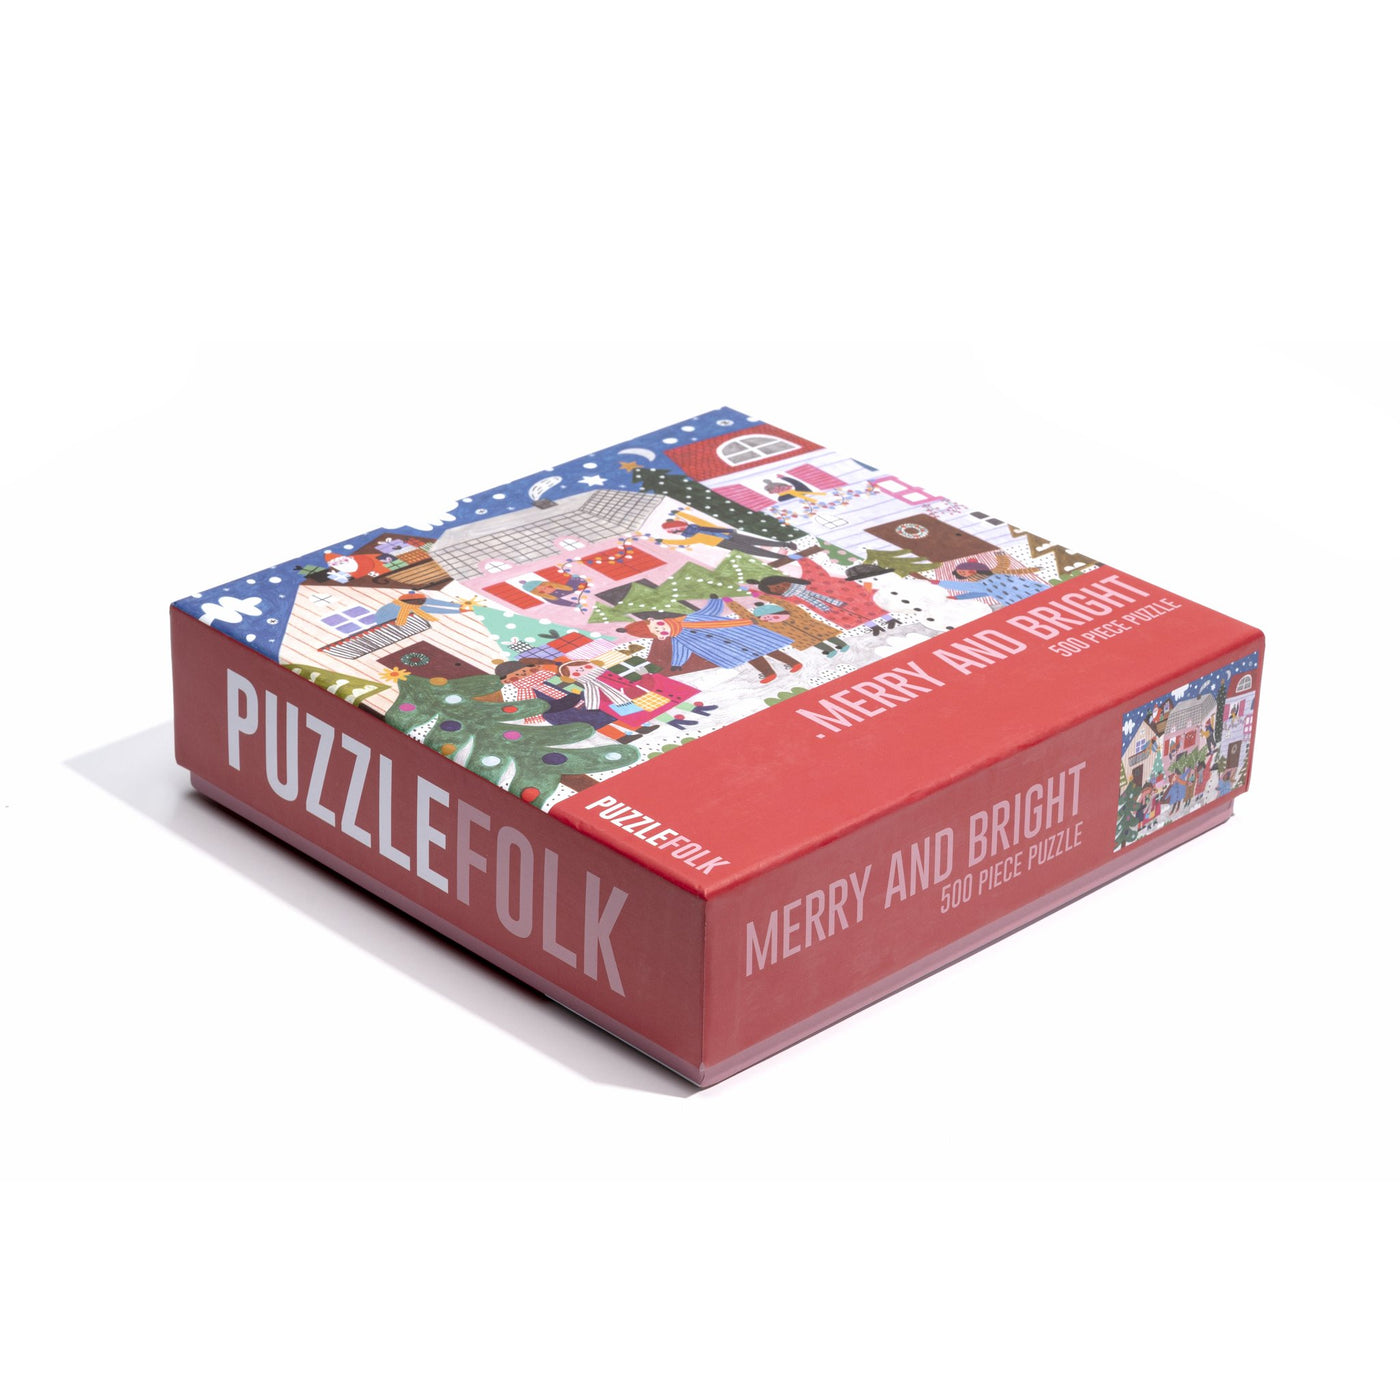 Merry & Bright | 500 Piece Jigsaw Puzzle Puzzlefolk Puzzledly.